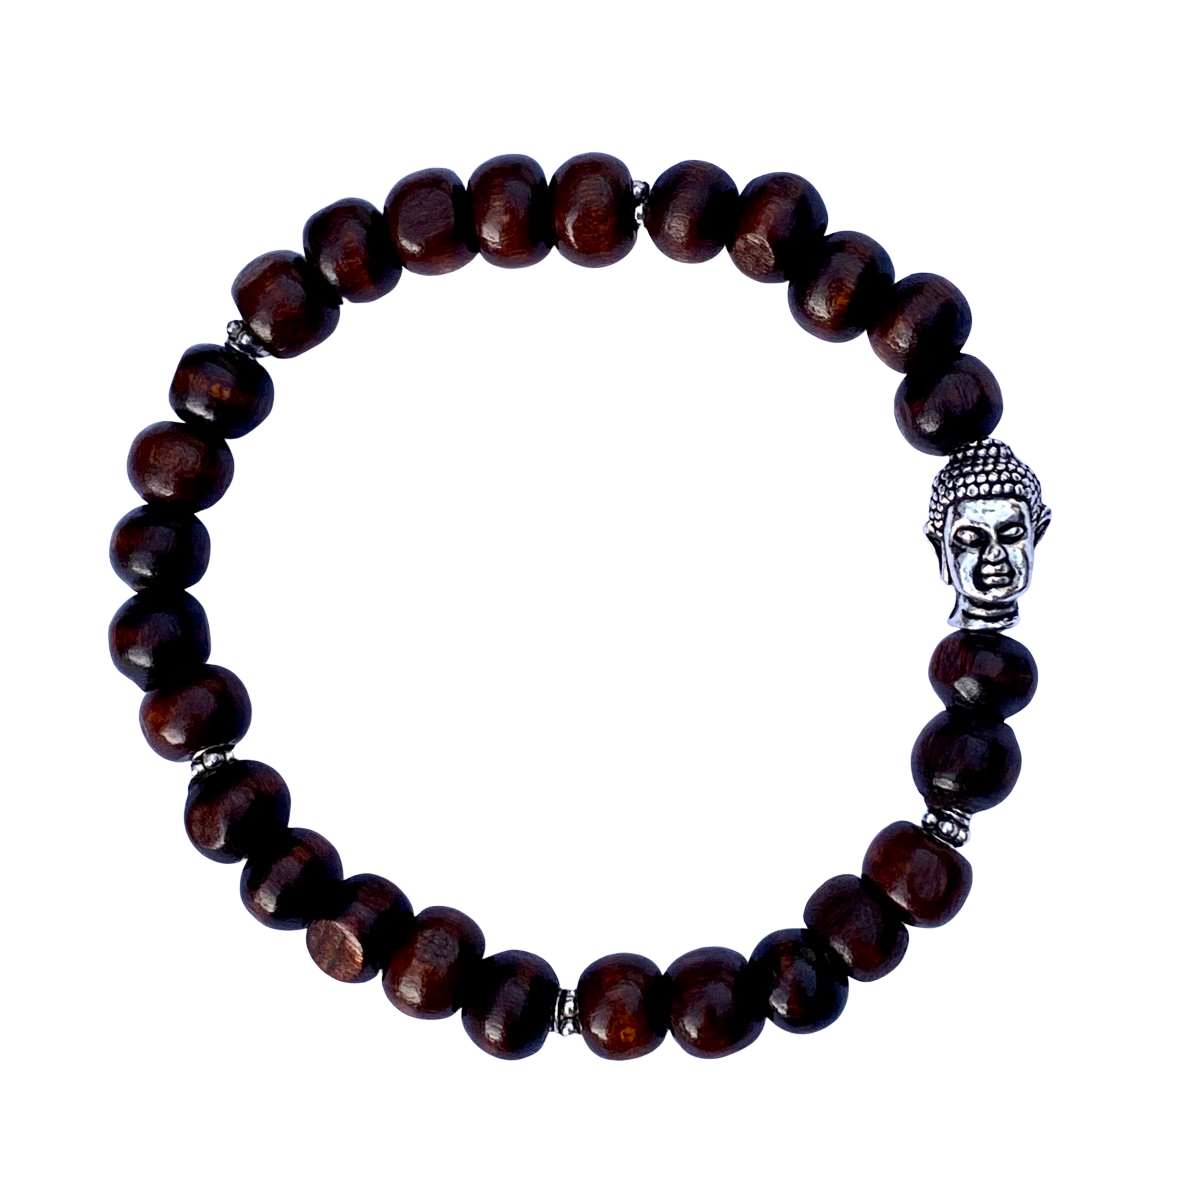 Unisex Wood Mala Bracelet with Buddha for Wisdom